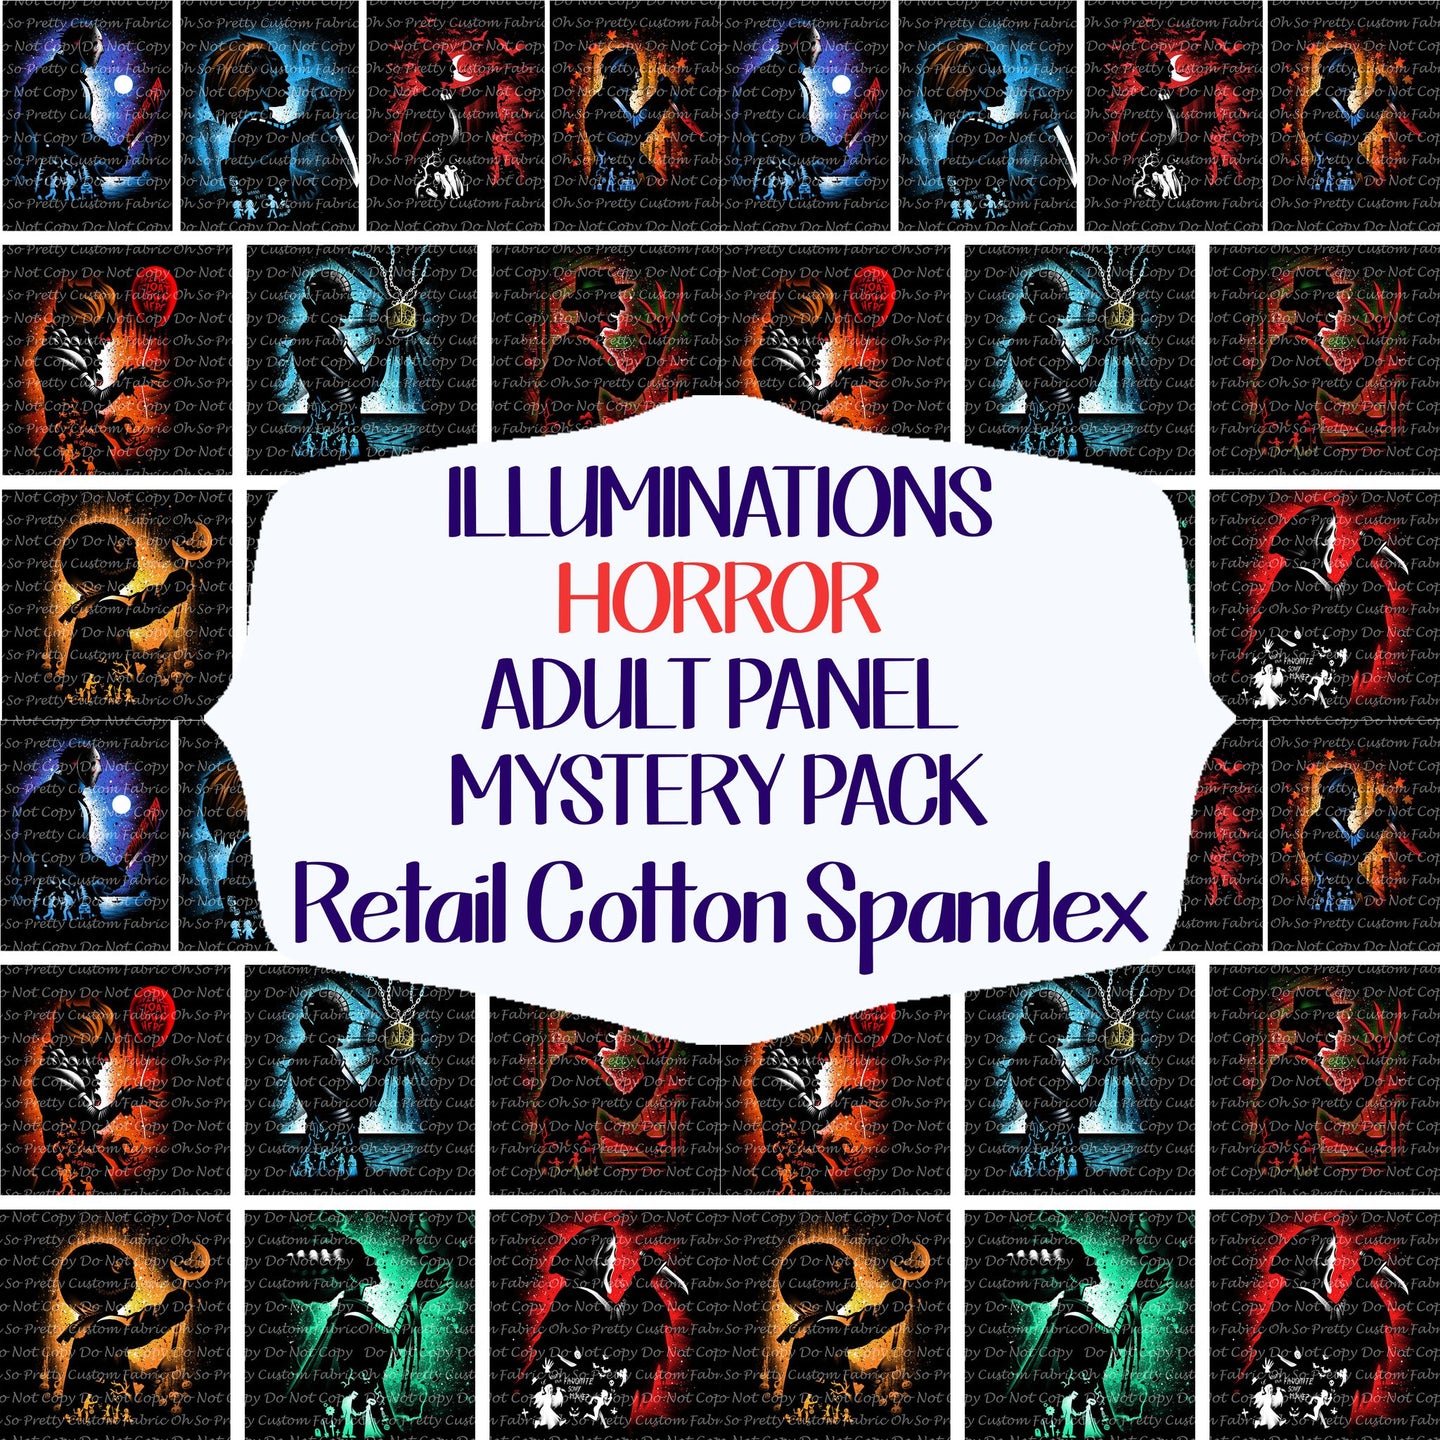 Retail - Illumination - Horror - Cotton Spandex - Adult Panels - Mystery Pack